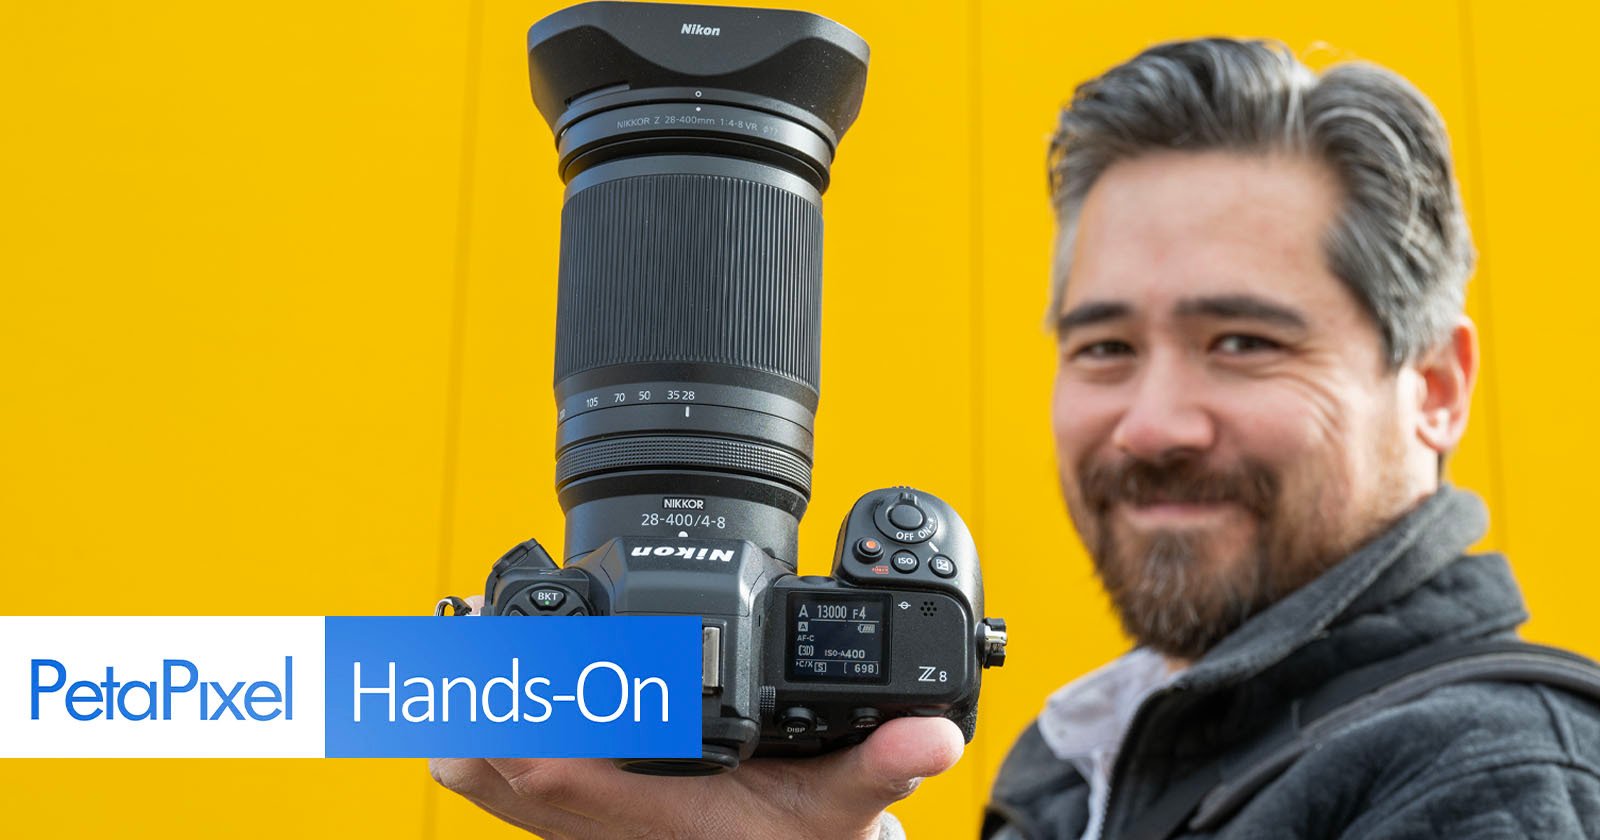 Nikon Z 28-400mm f/4-8 VR lens for full-frame Nikon mirrorless cameras -- hands-on first impressions